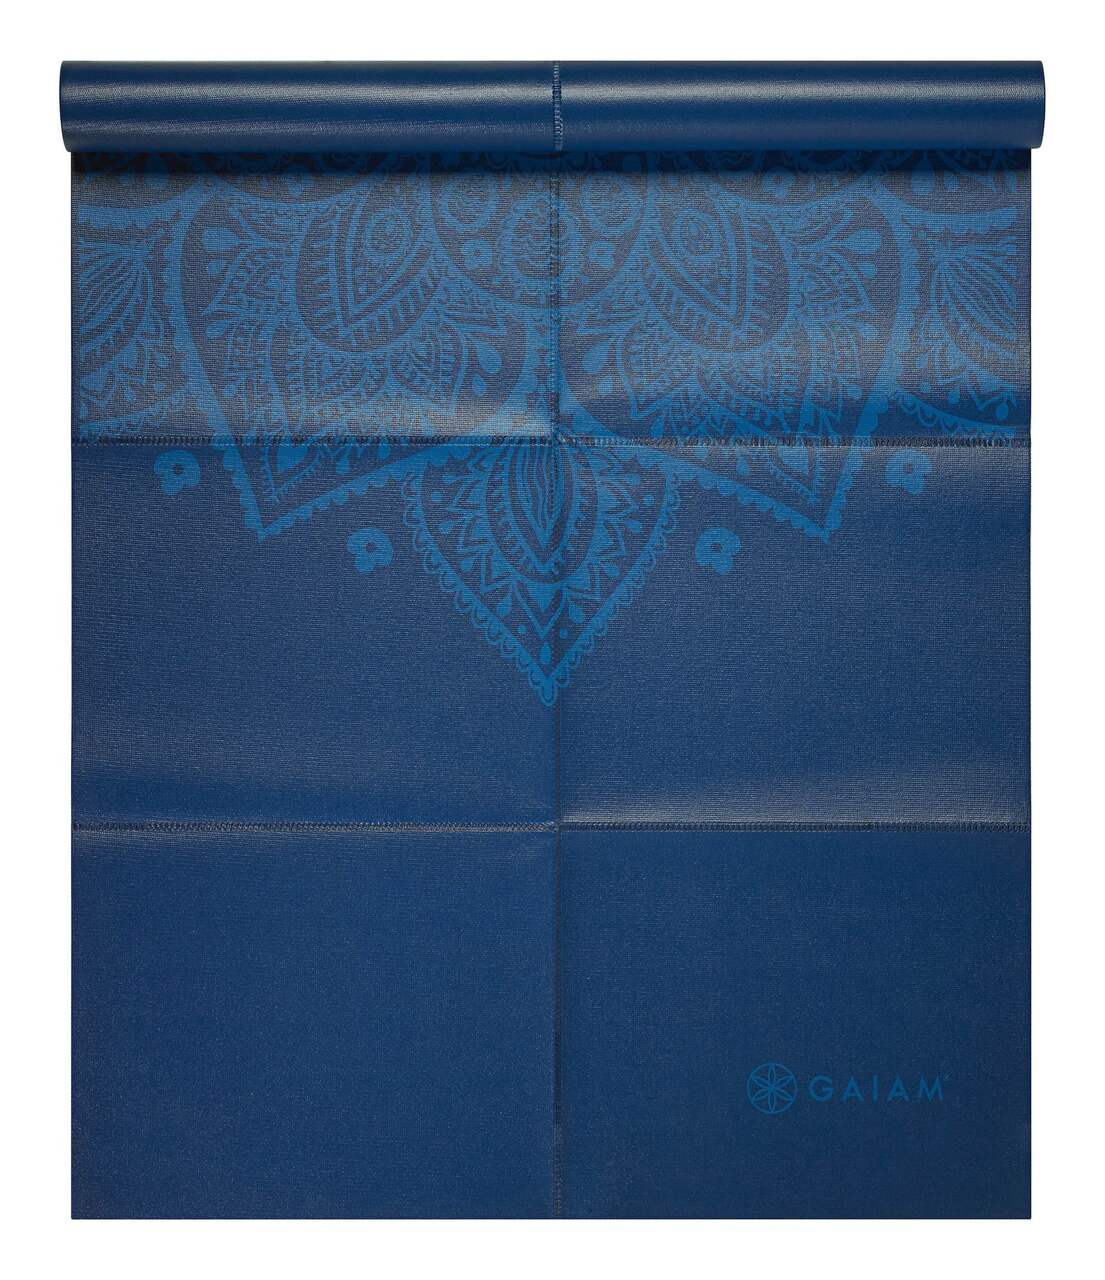 Gaiam Foldable Yoga Mat, Blue Sundial, 2-mm